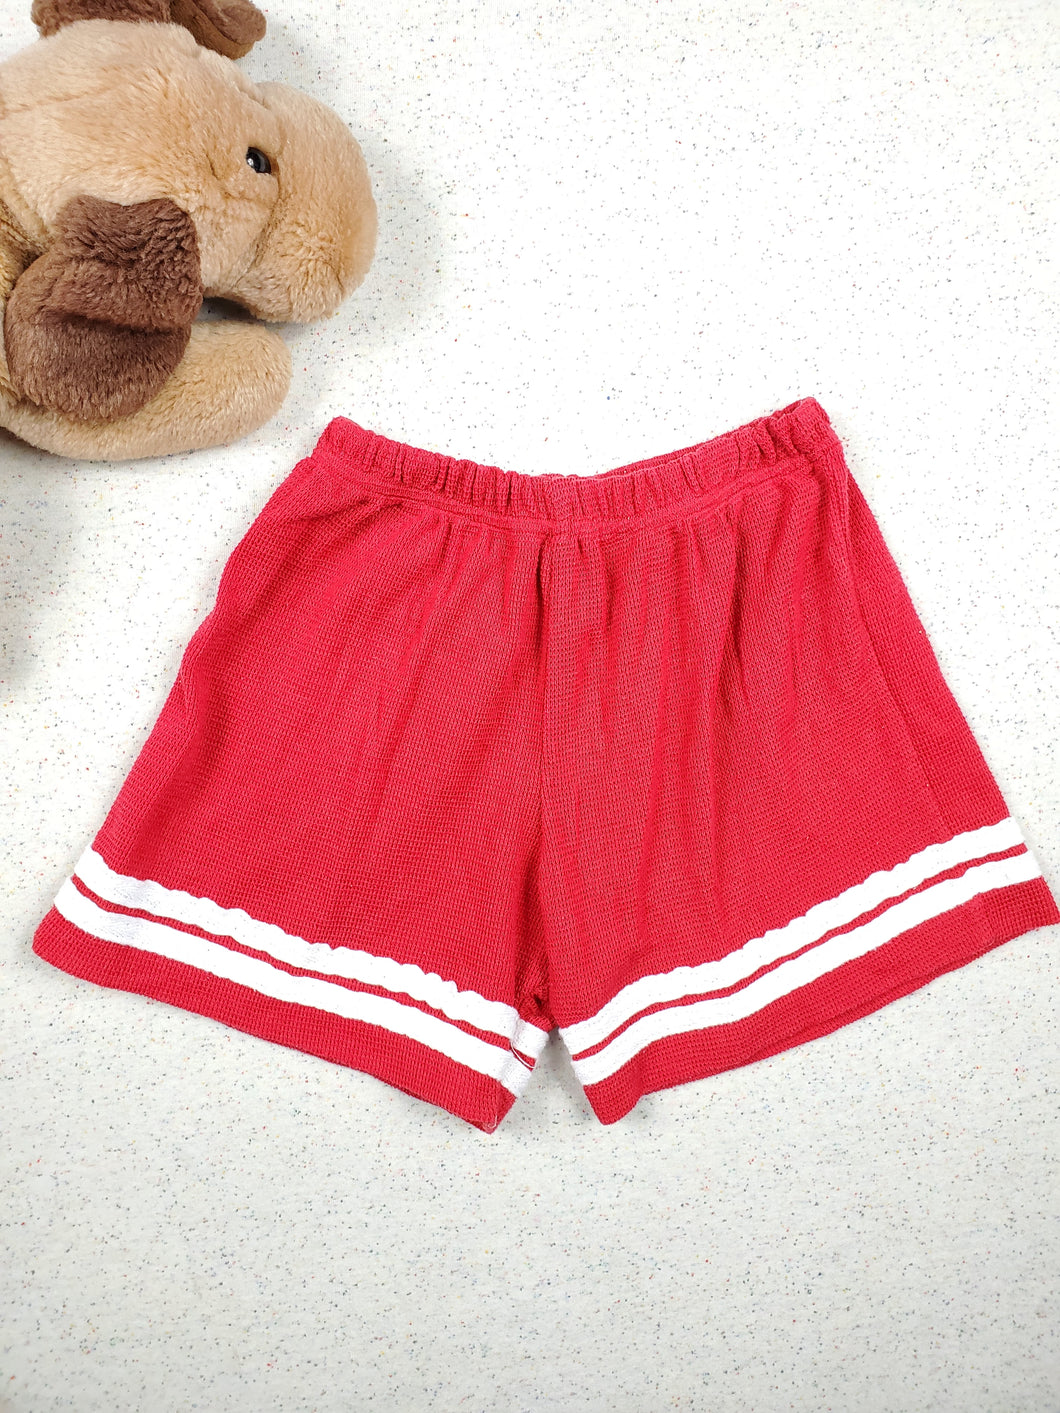 Vintage Sport Shorts 5t